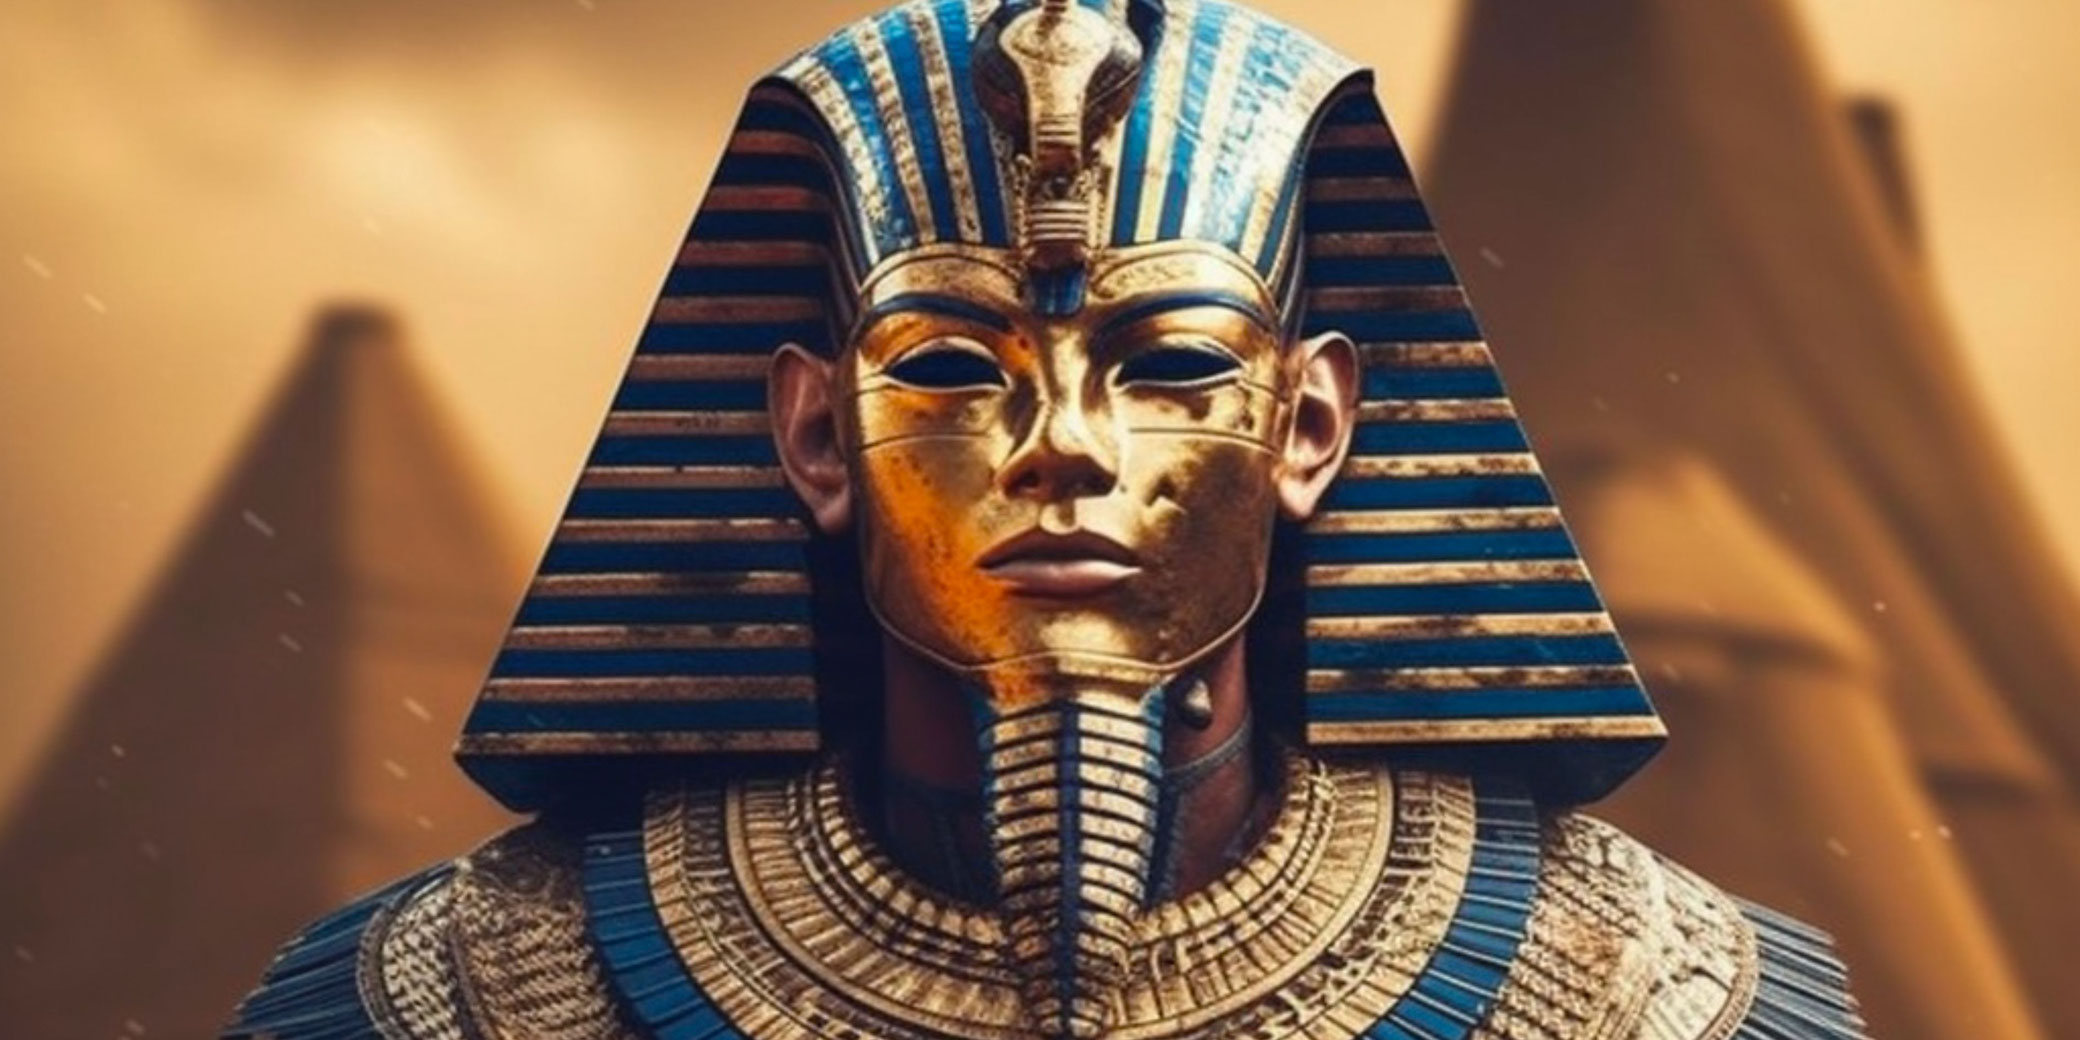 Egyptian Pharaohs Of The 18th Dynasty: A Historical Analysis